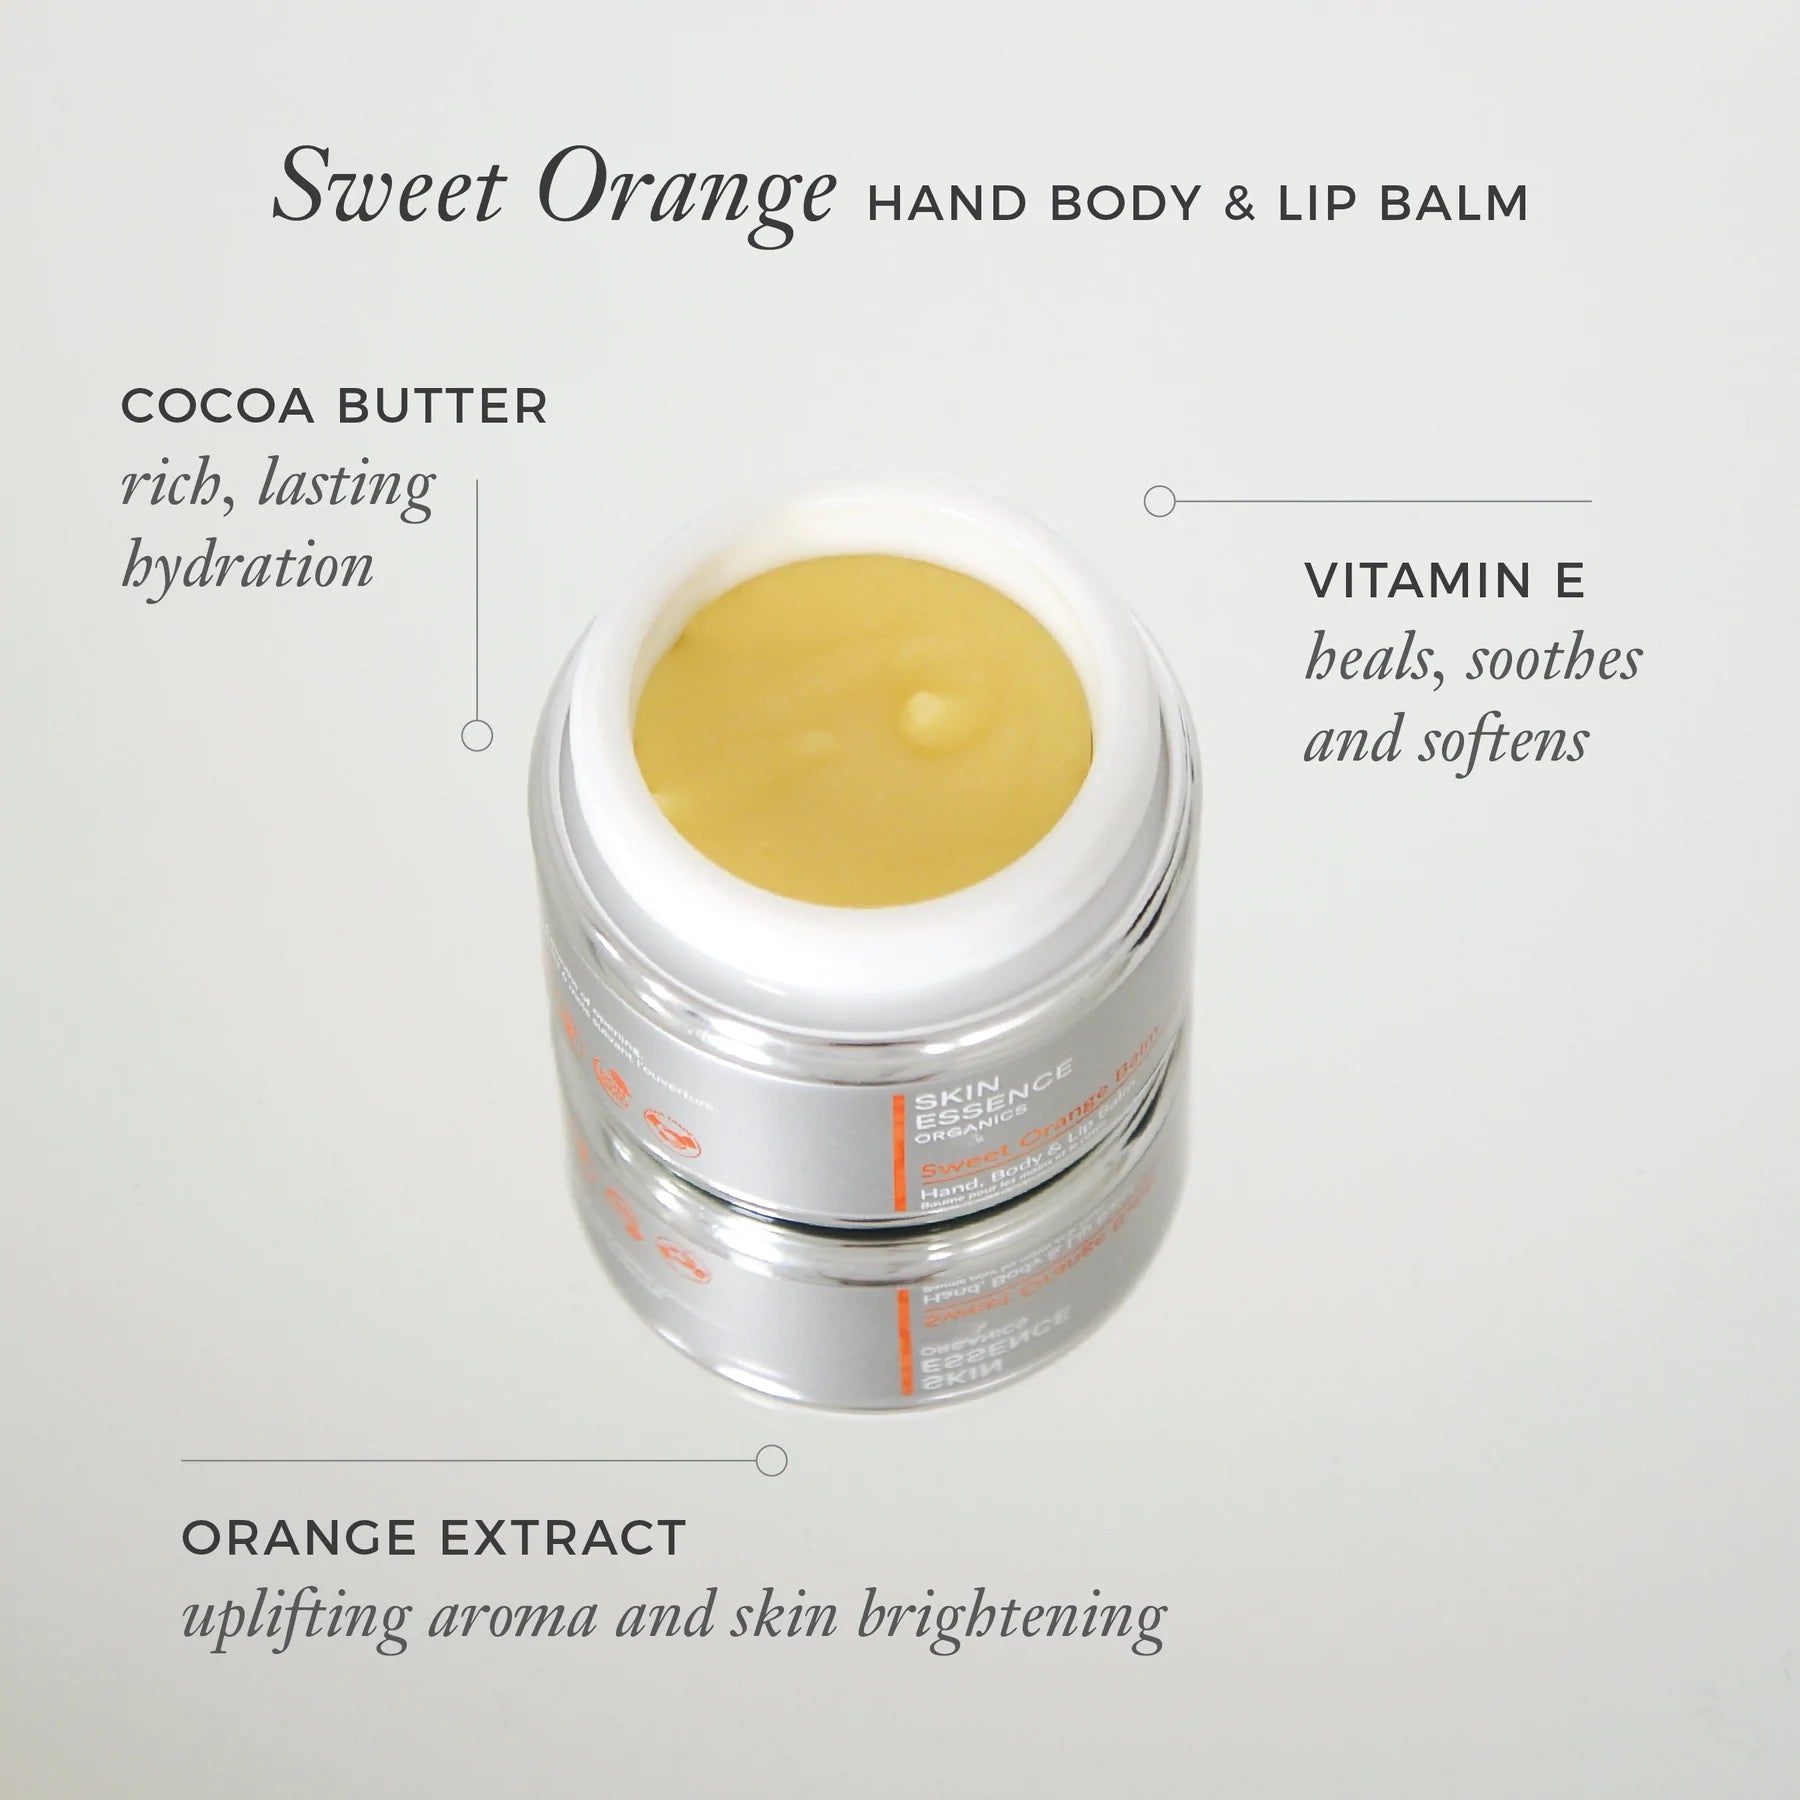 Skin Essence - Sweet Orange Balm